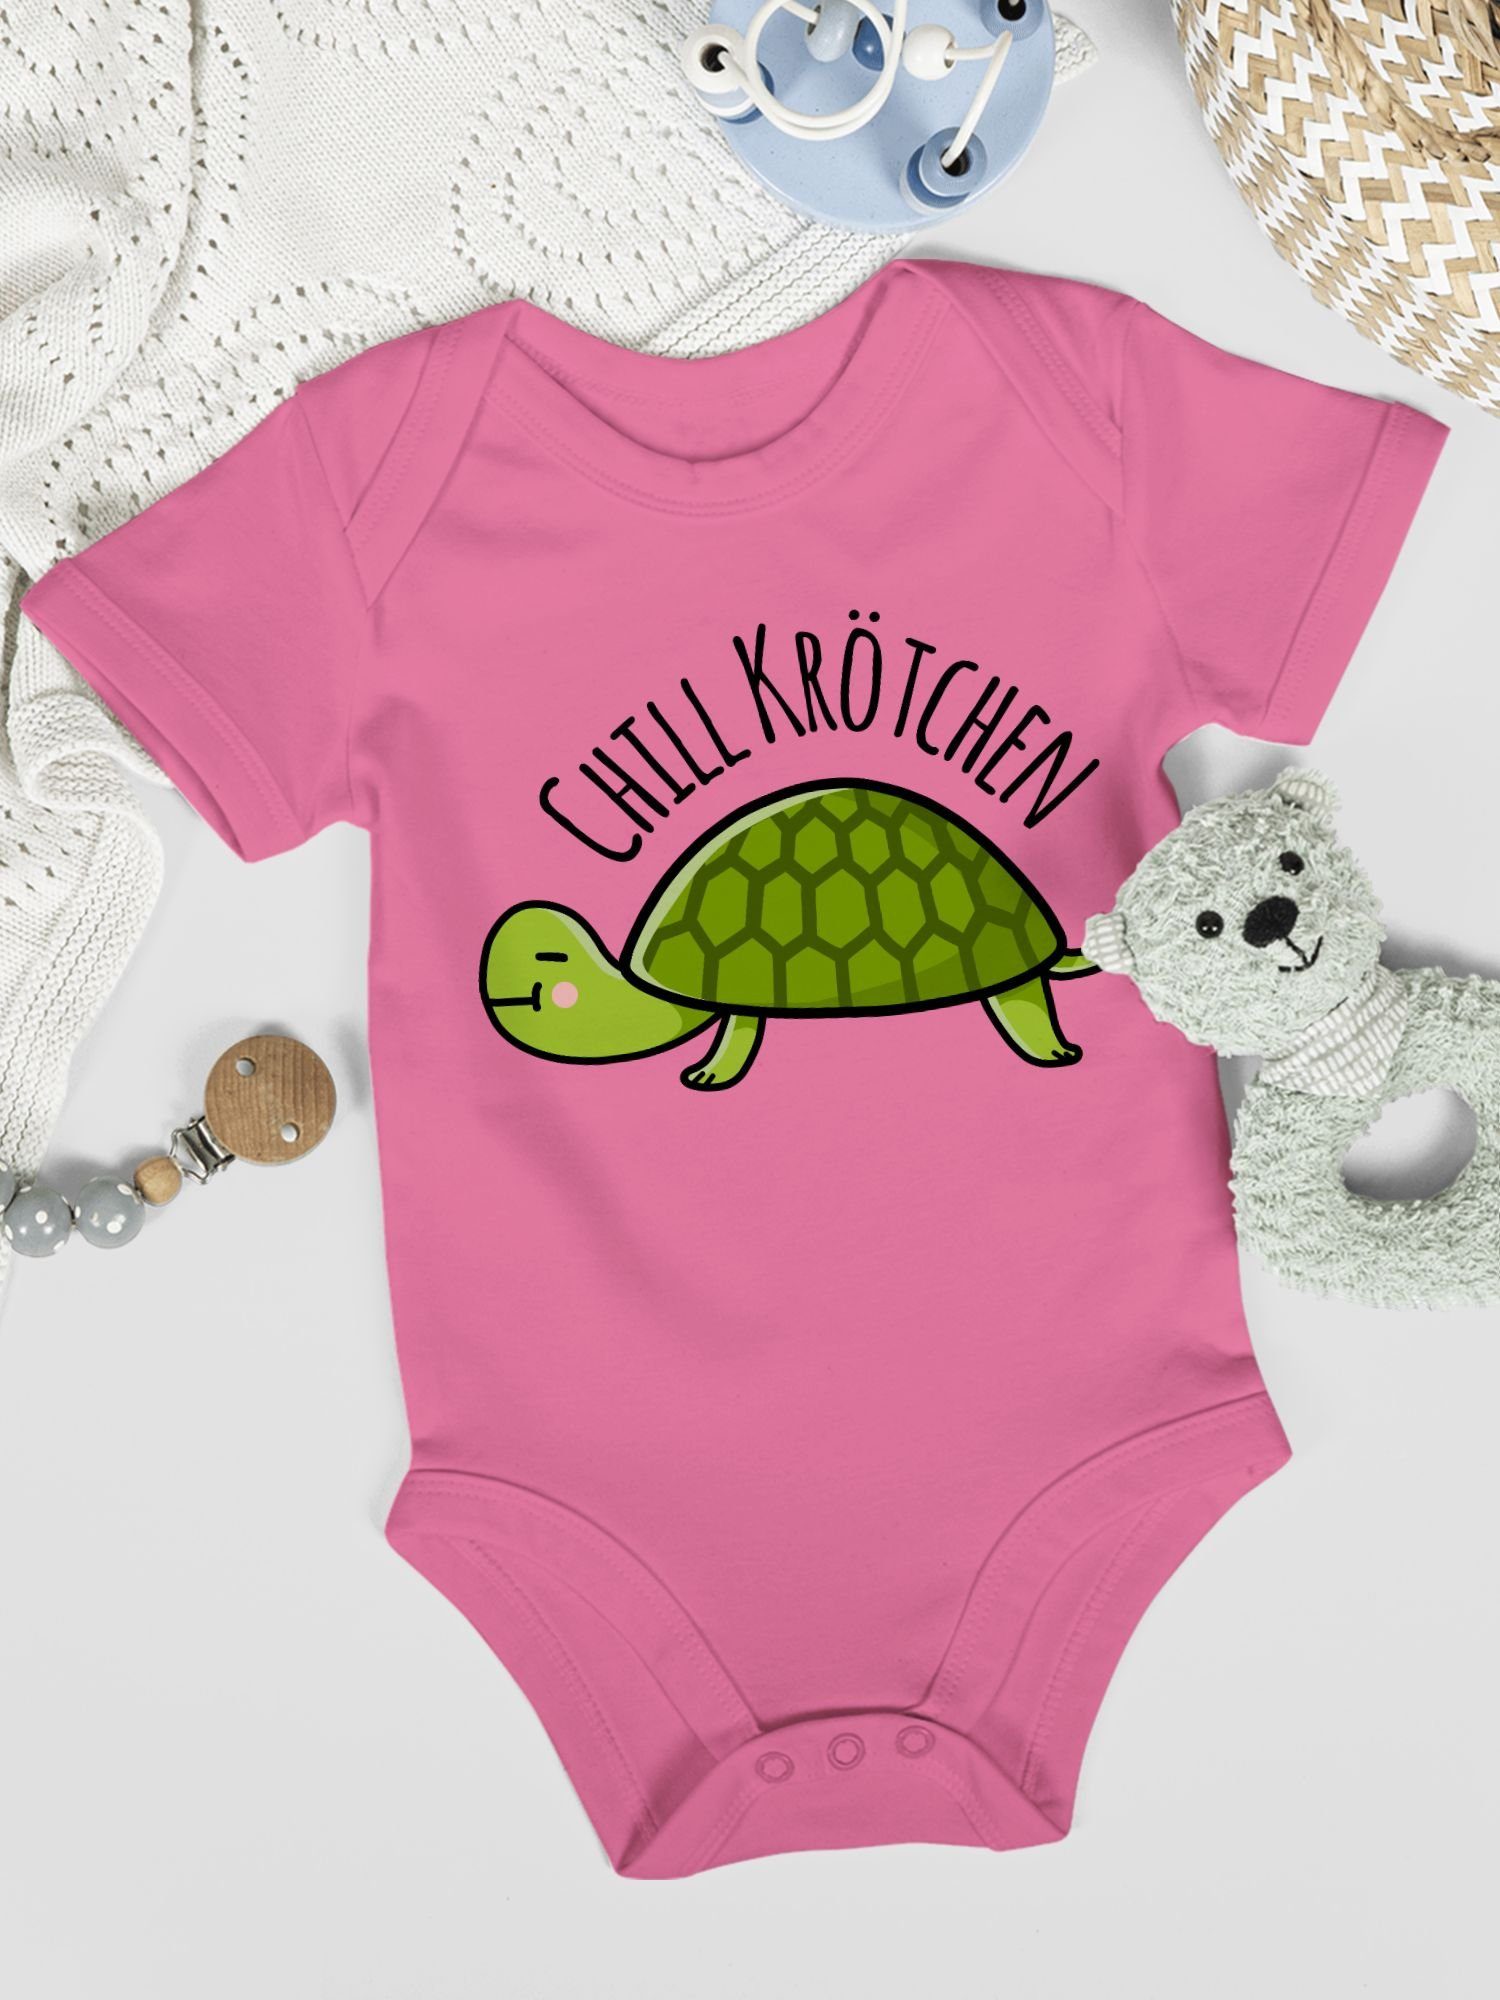 Shirtracer Shirtbody Tiermotiv Krötchen Print Schildkröte Pink Chill 2 Animal Baby